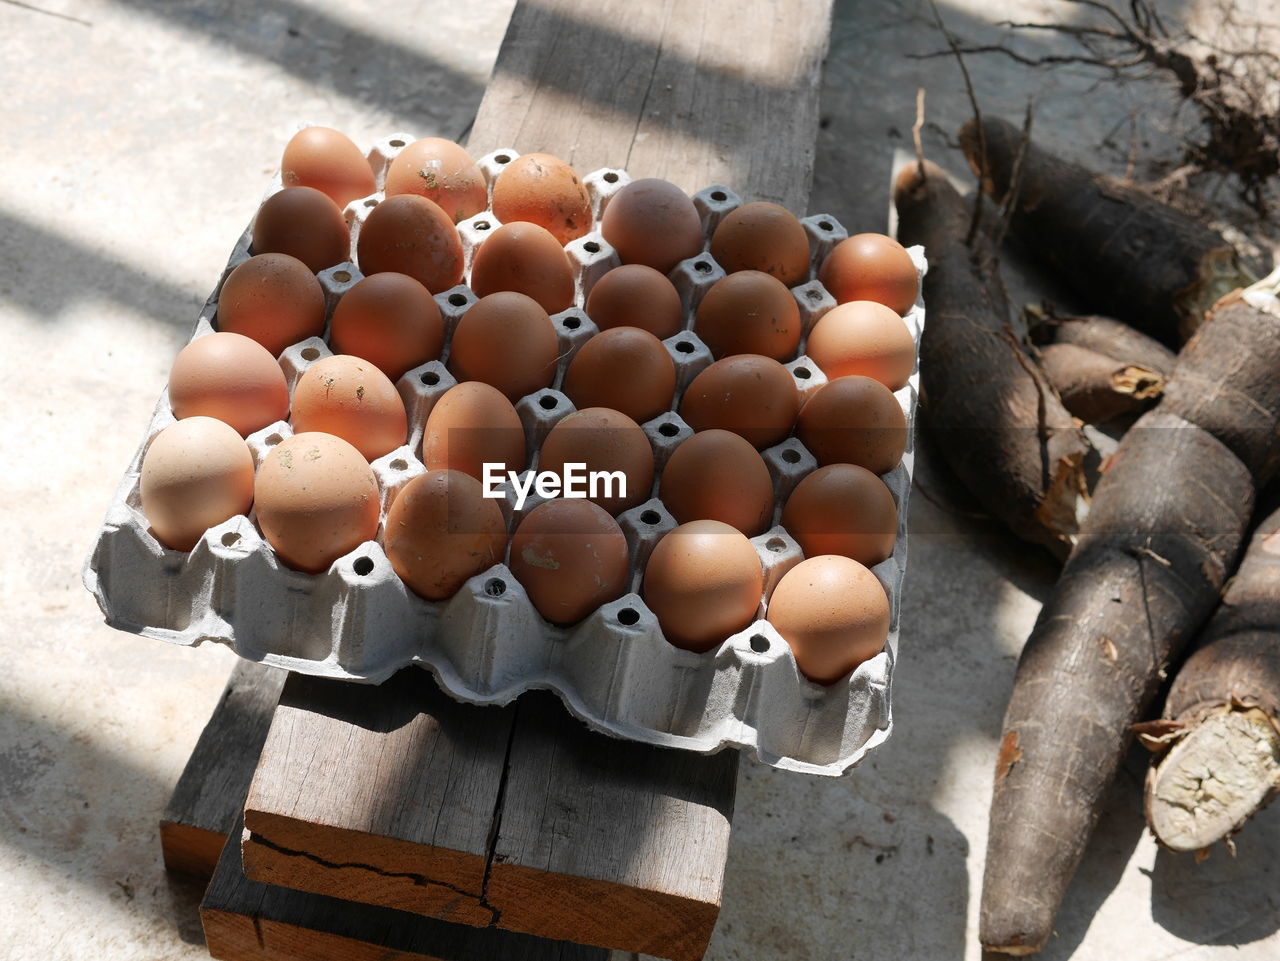 Fresh eggs from the farm